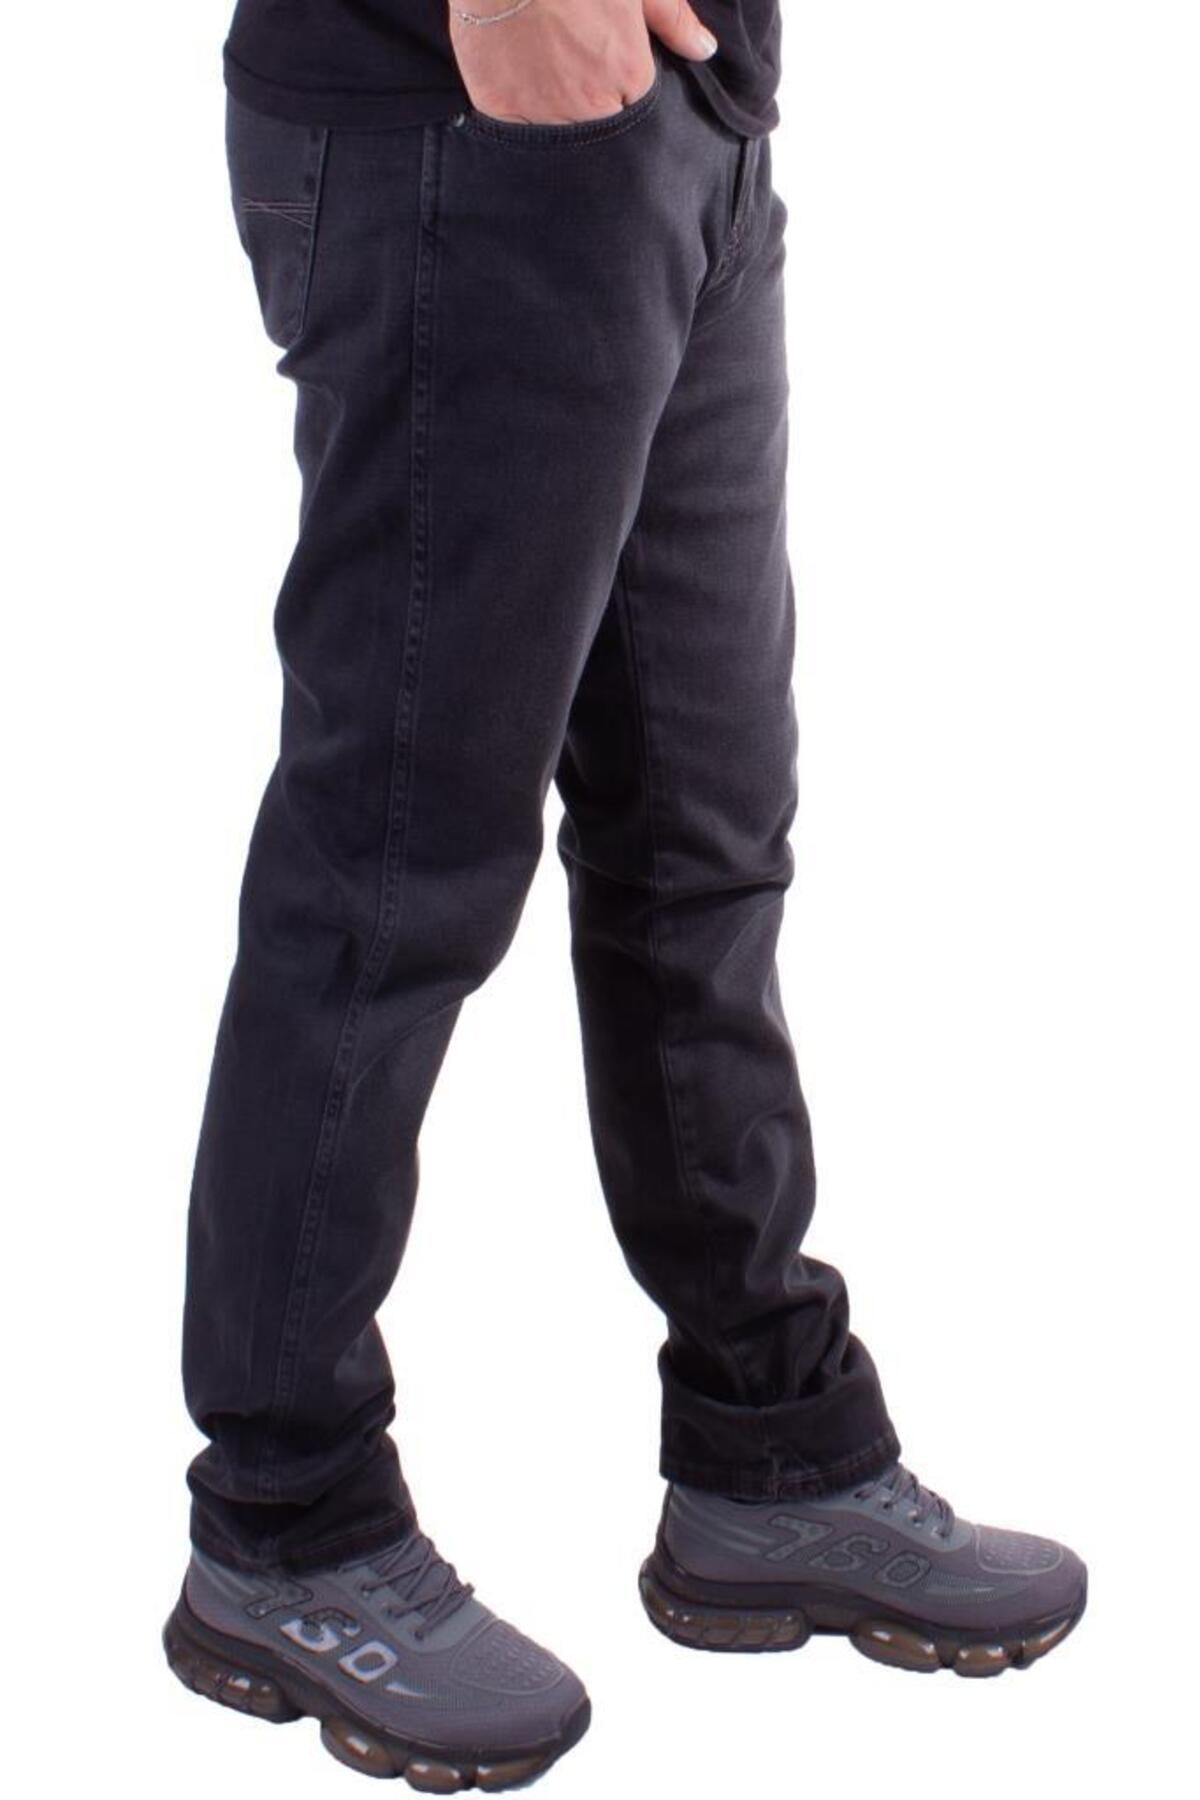 Twister Jeans Twister Vegas 132-272 Füme Yüksek Bel Rahat Paça Erkek Jeans Pantolon